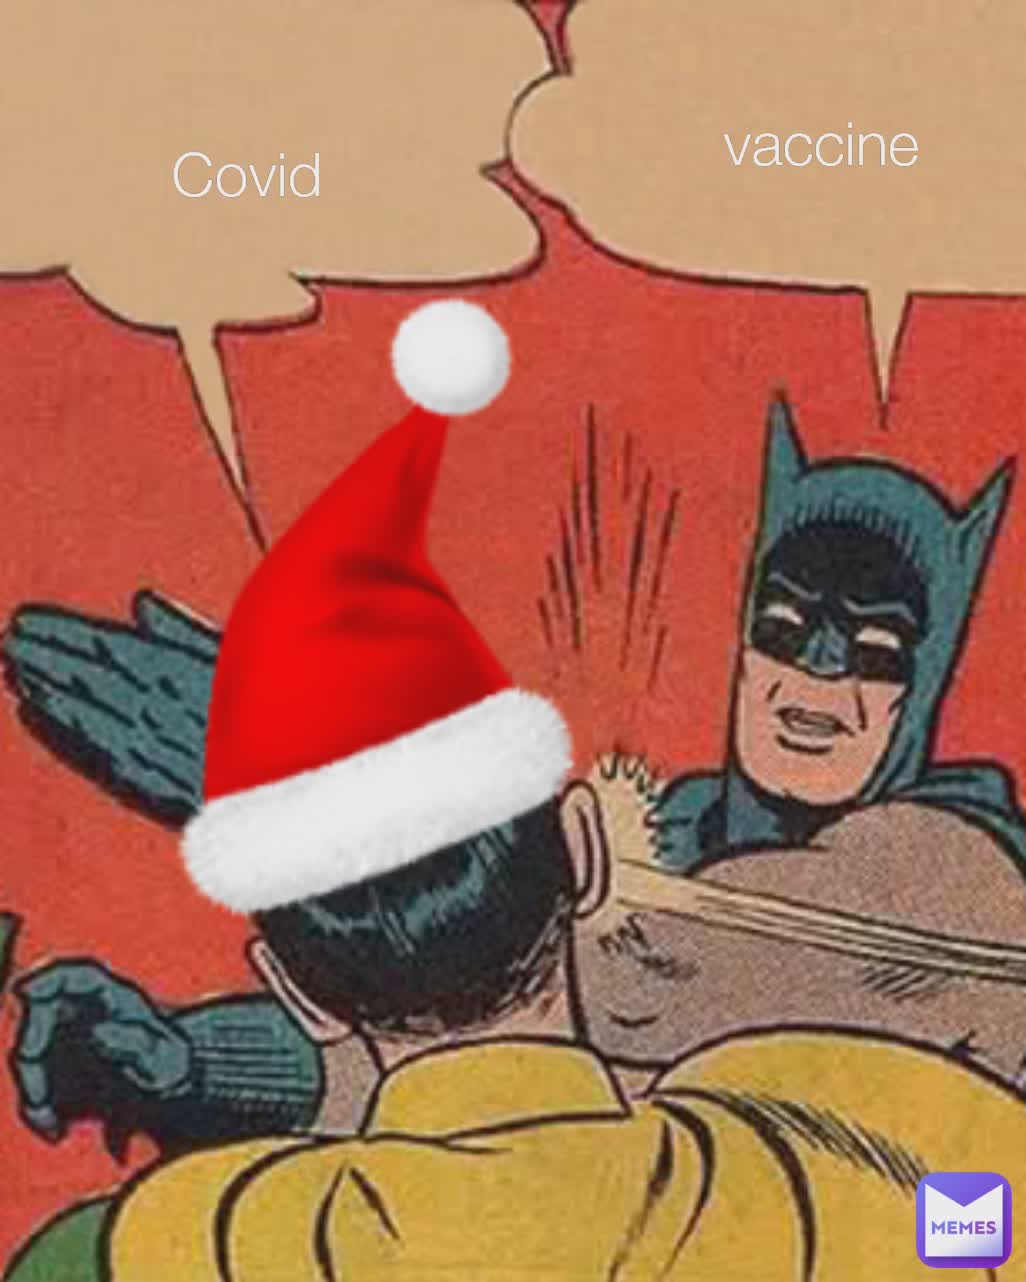 Type Text Covid vaccine